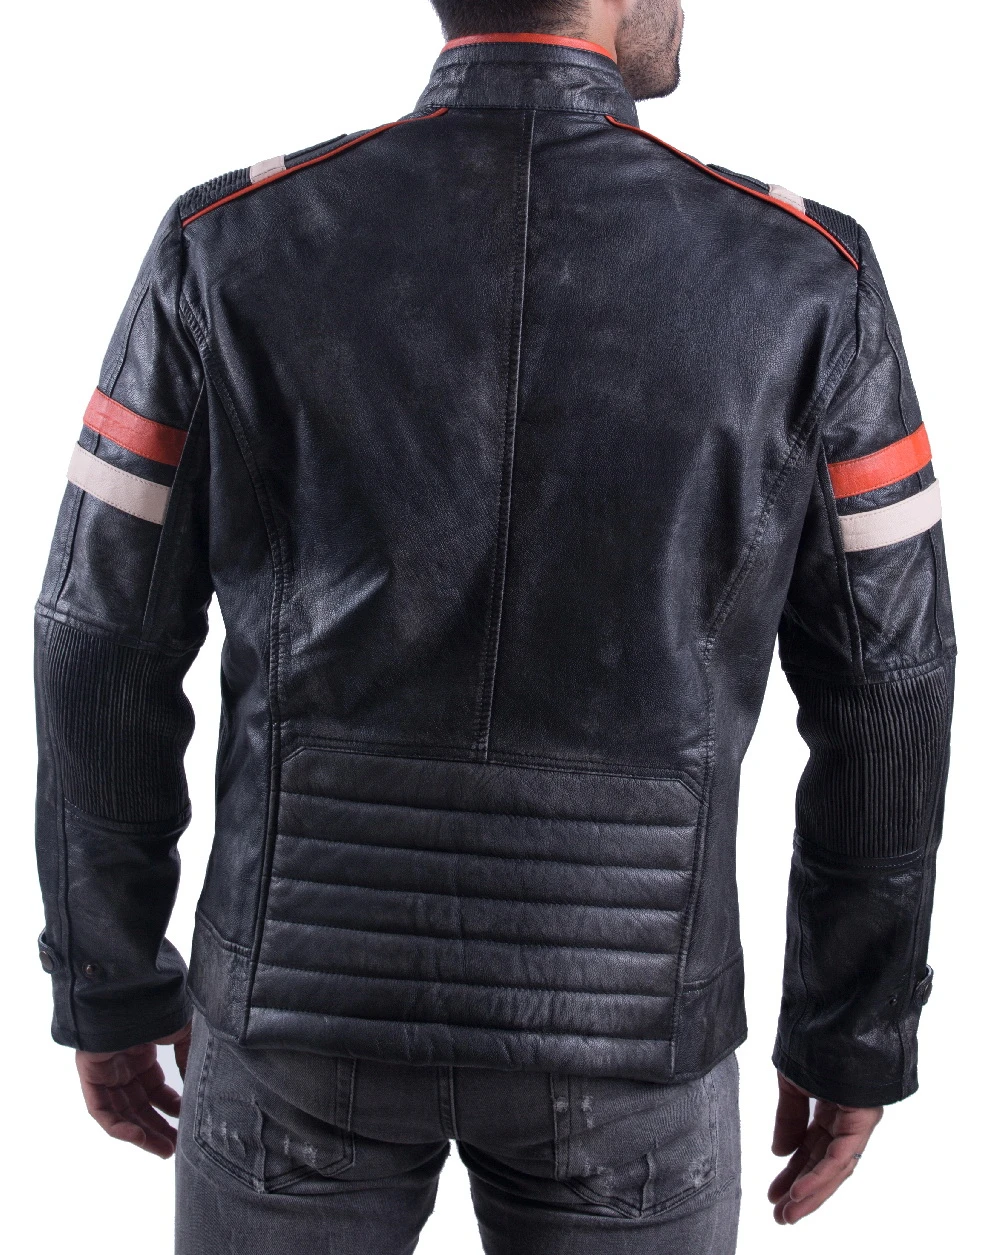 Vintage Retro Motorcycle Jacket Distressed Leather